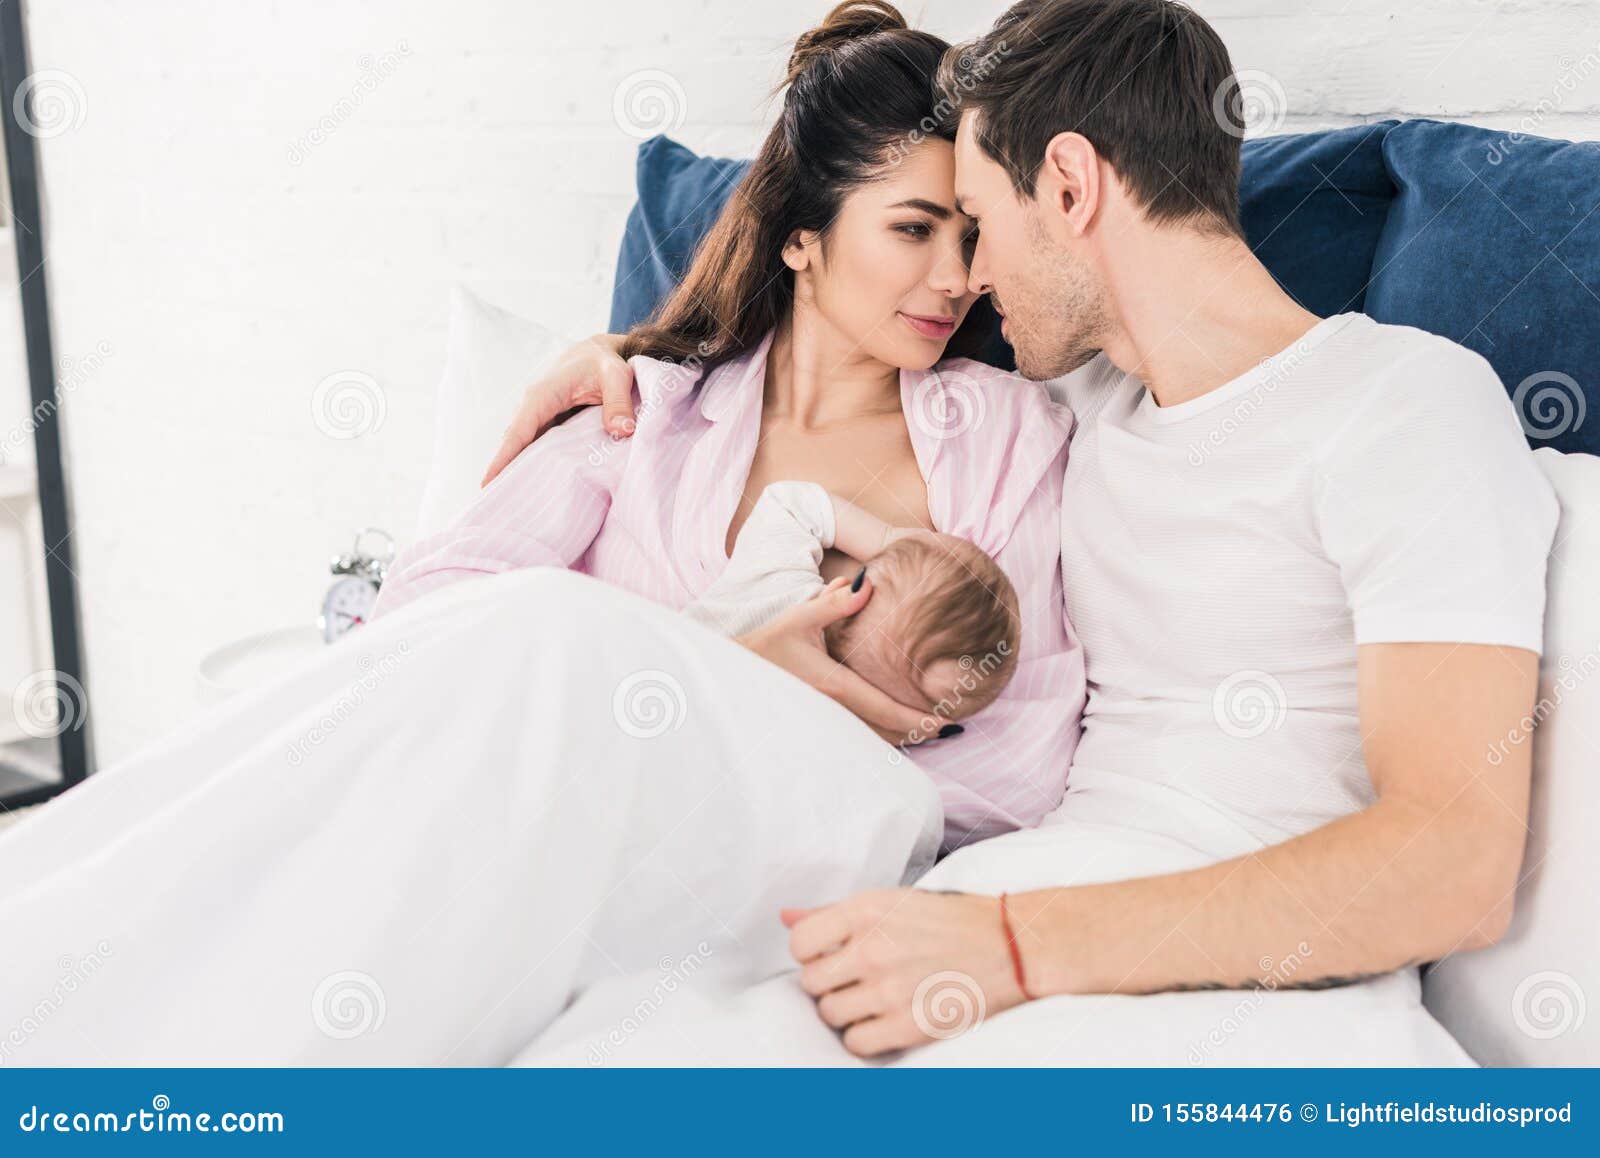 Woman Breastfeeding Husband Stock Photos image